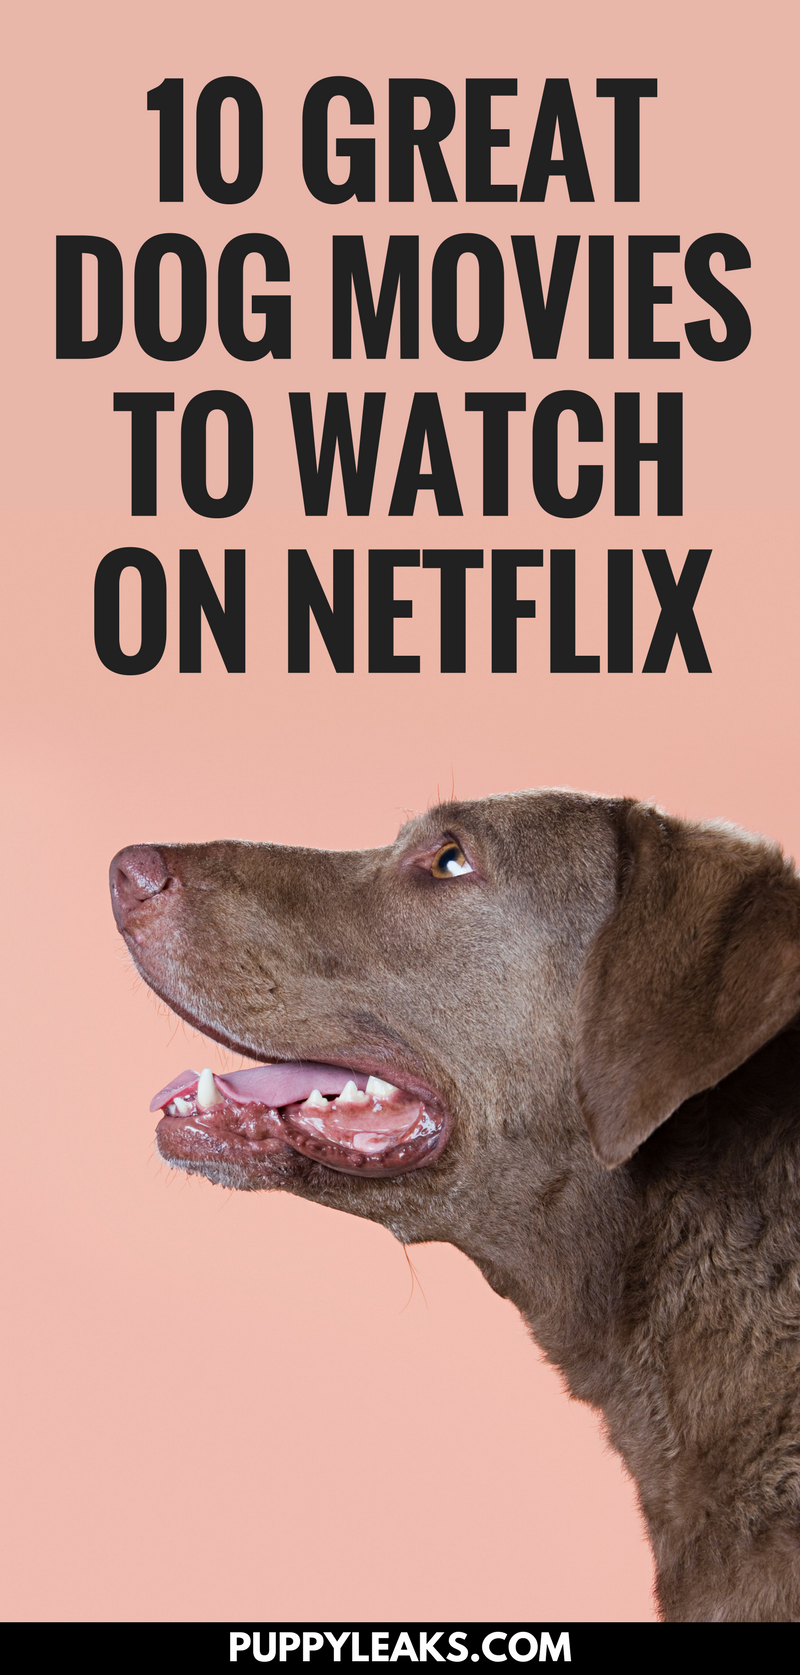 10 Dog Movies to Watch on Netflix